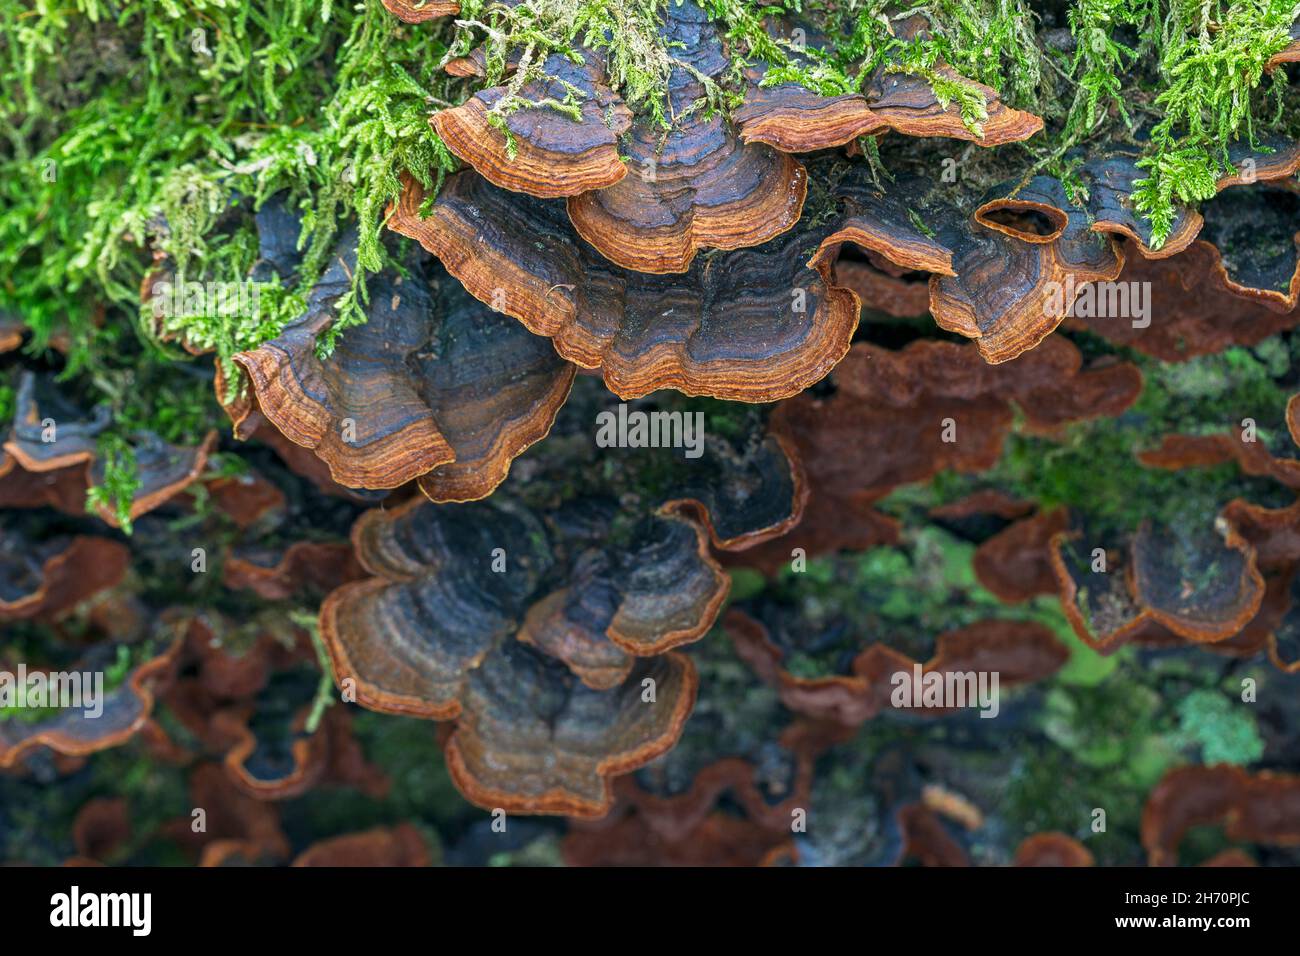 Red-Brown Bristle Disk (Hymenochaete rubiginosa) on an old oak trunk. Germany Stock Photo